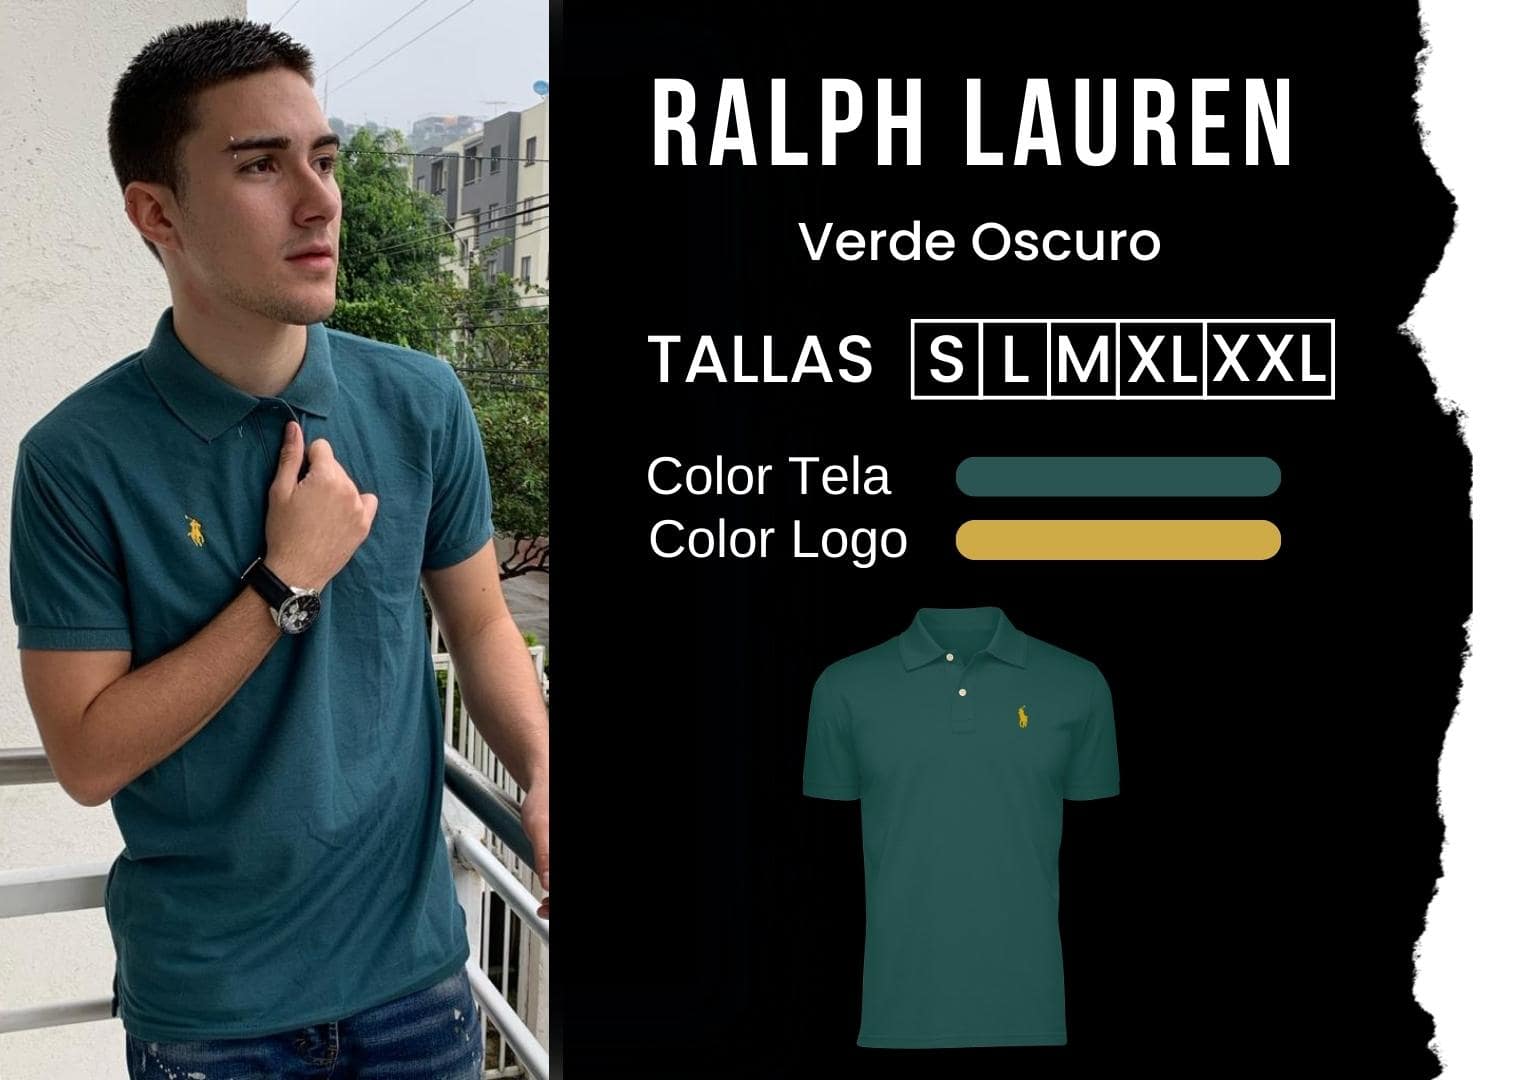 camiseta Ralph Lauren polo hombre tienda olevan color verde oscuro